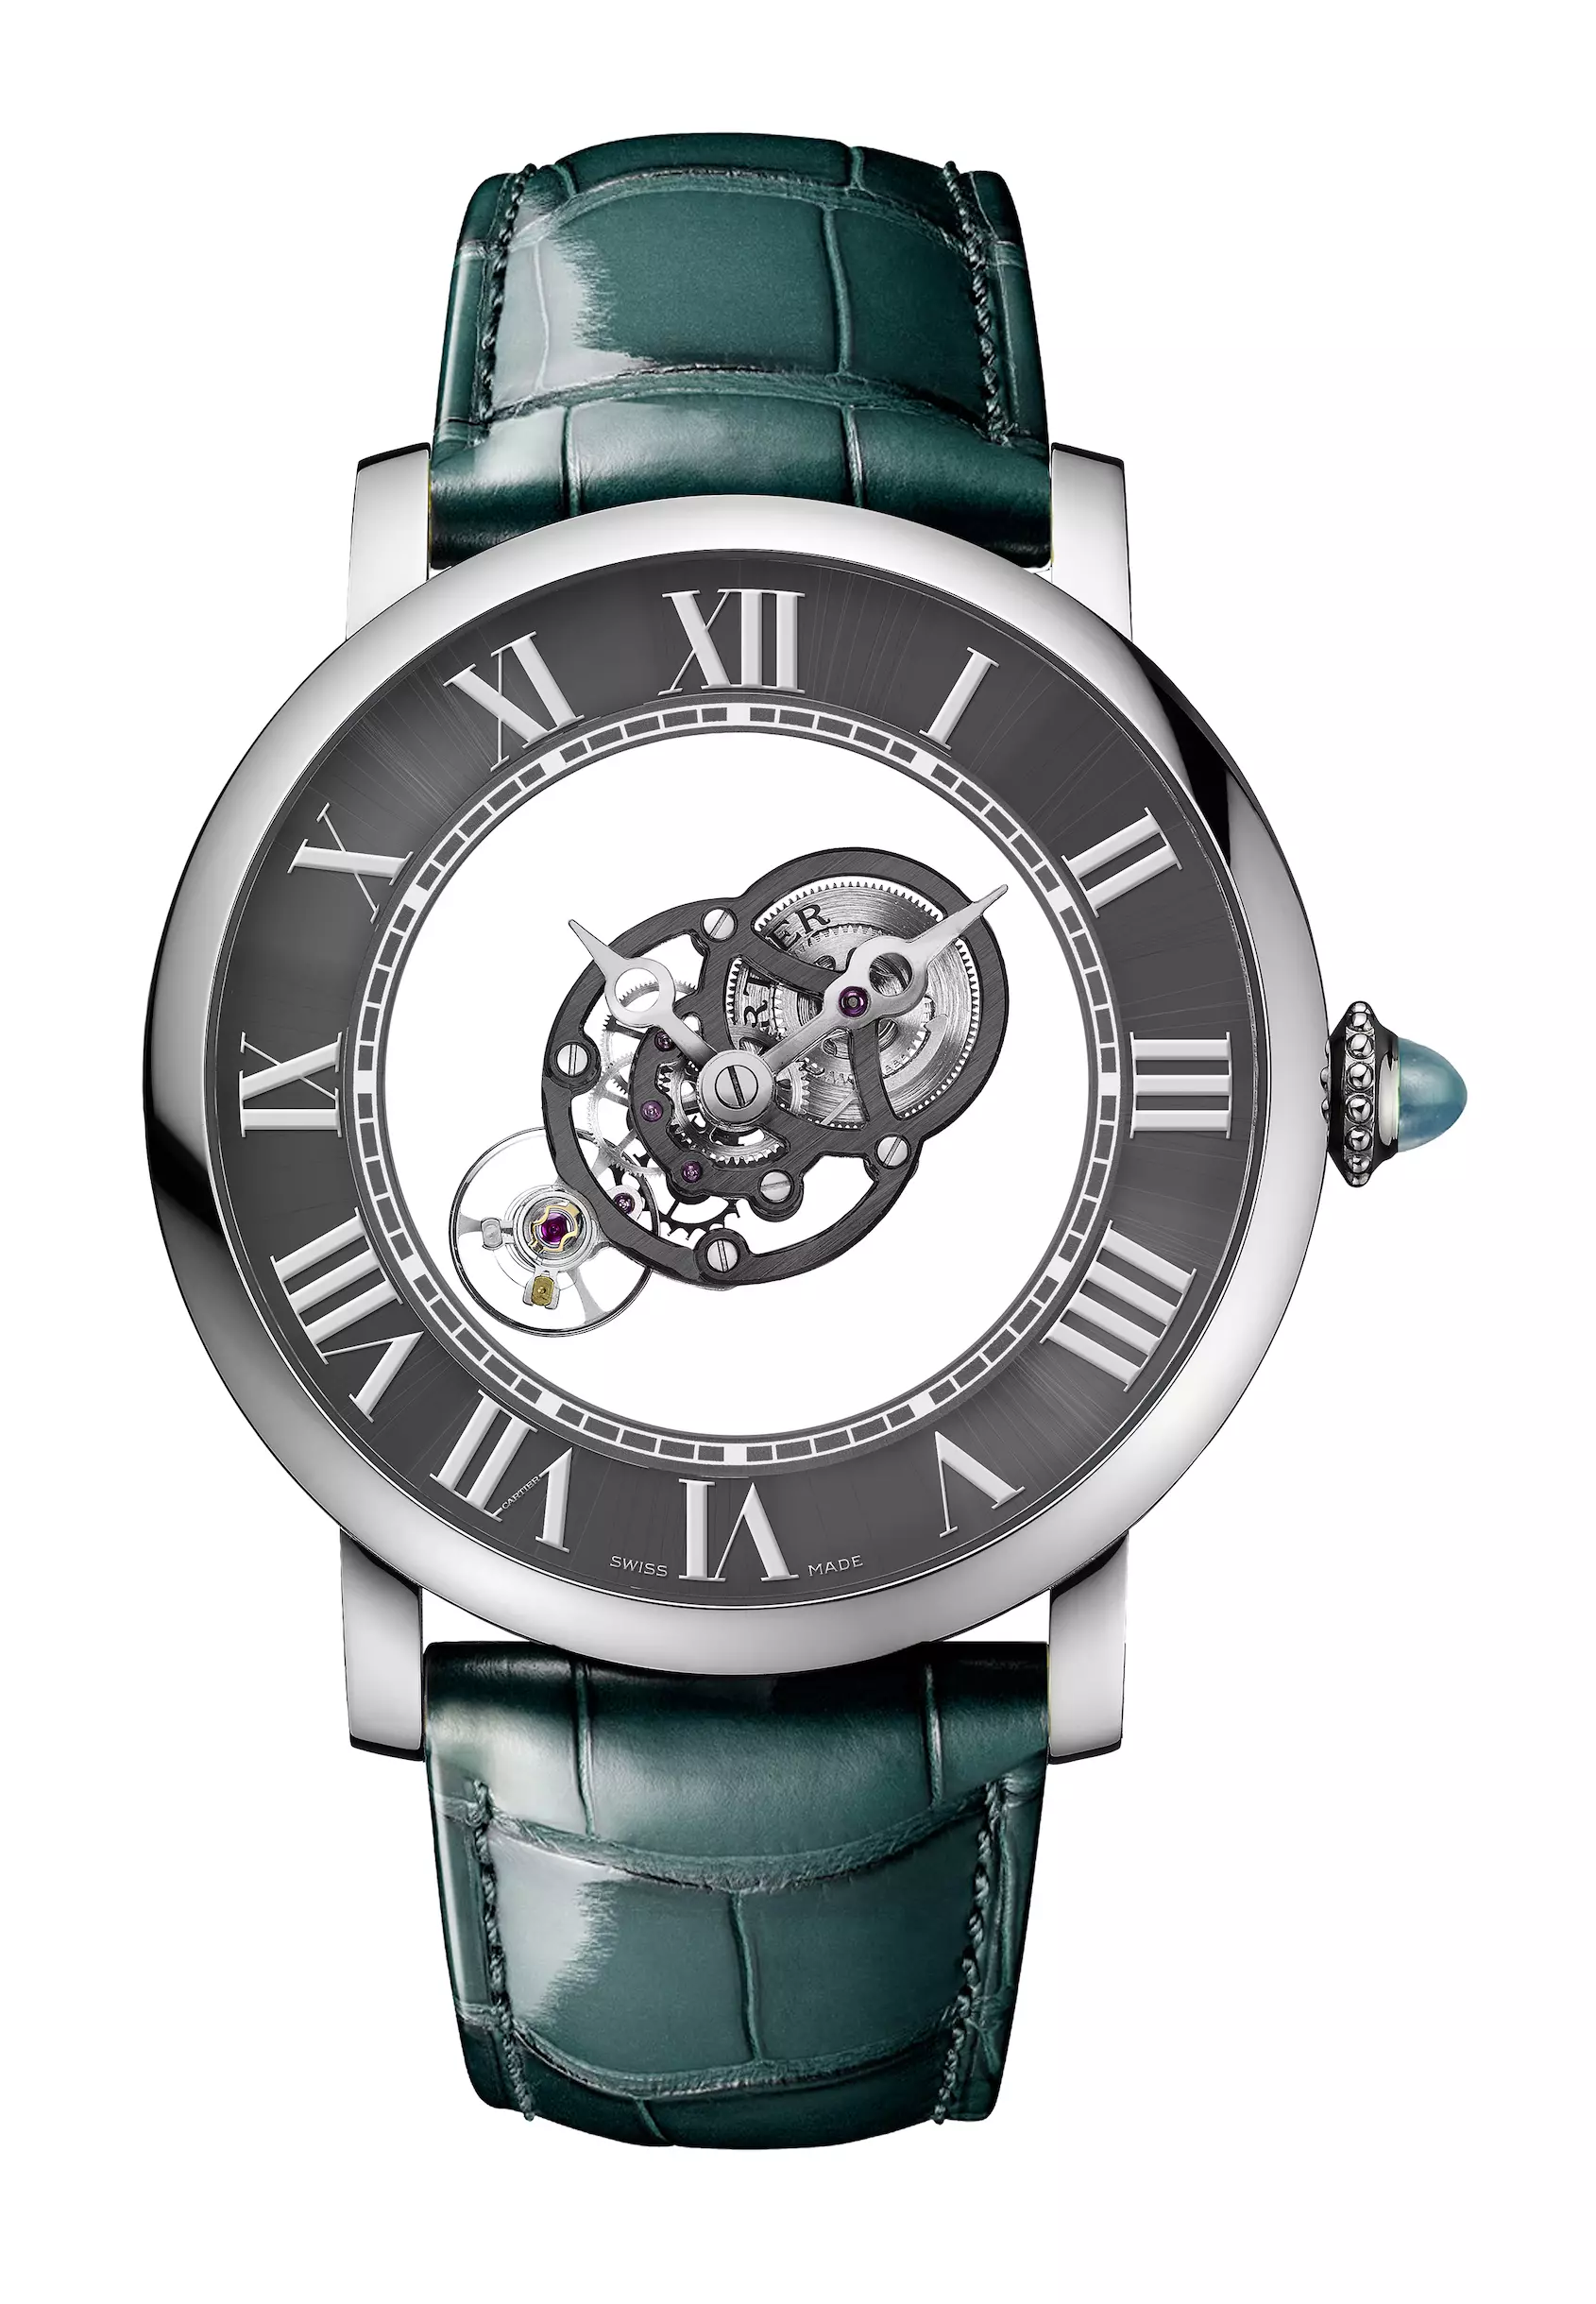 Colección Cartier de Alta Relojería